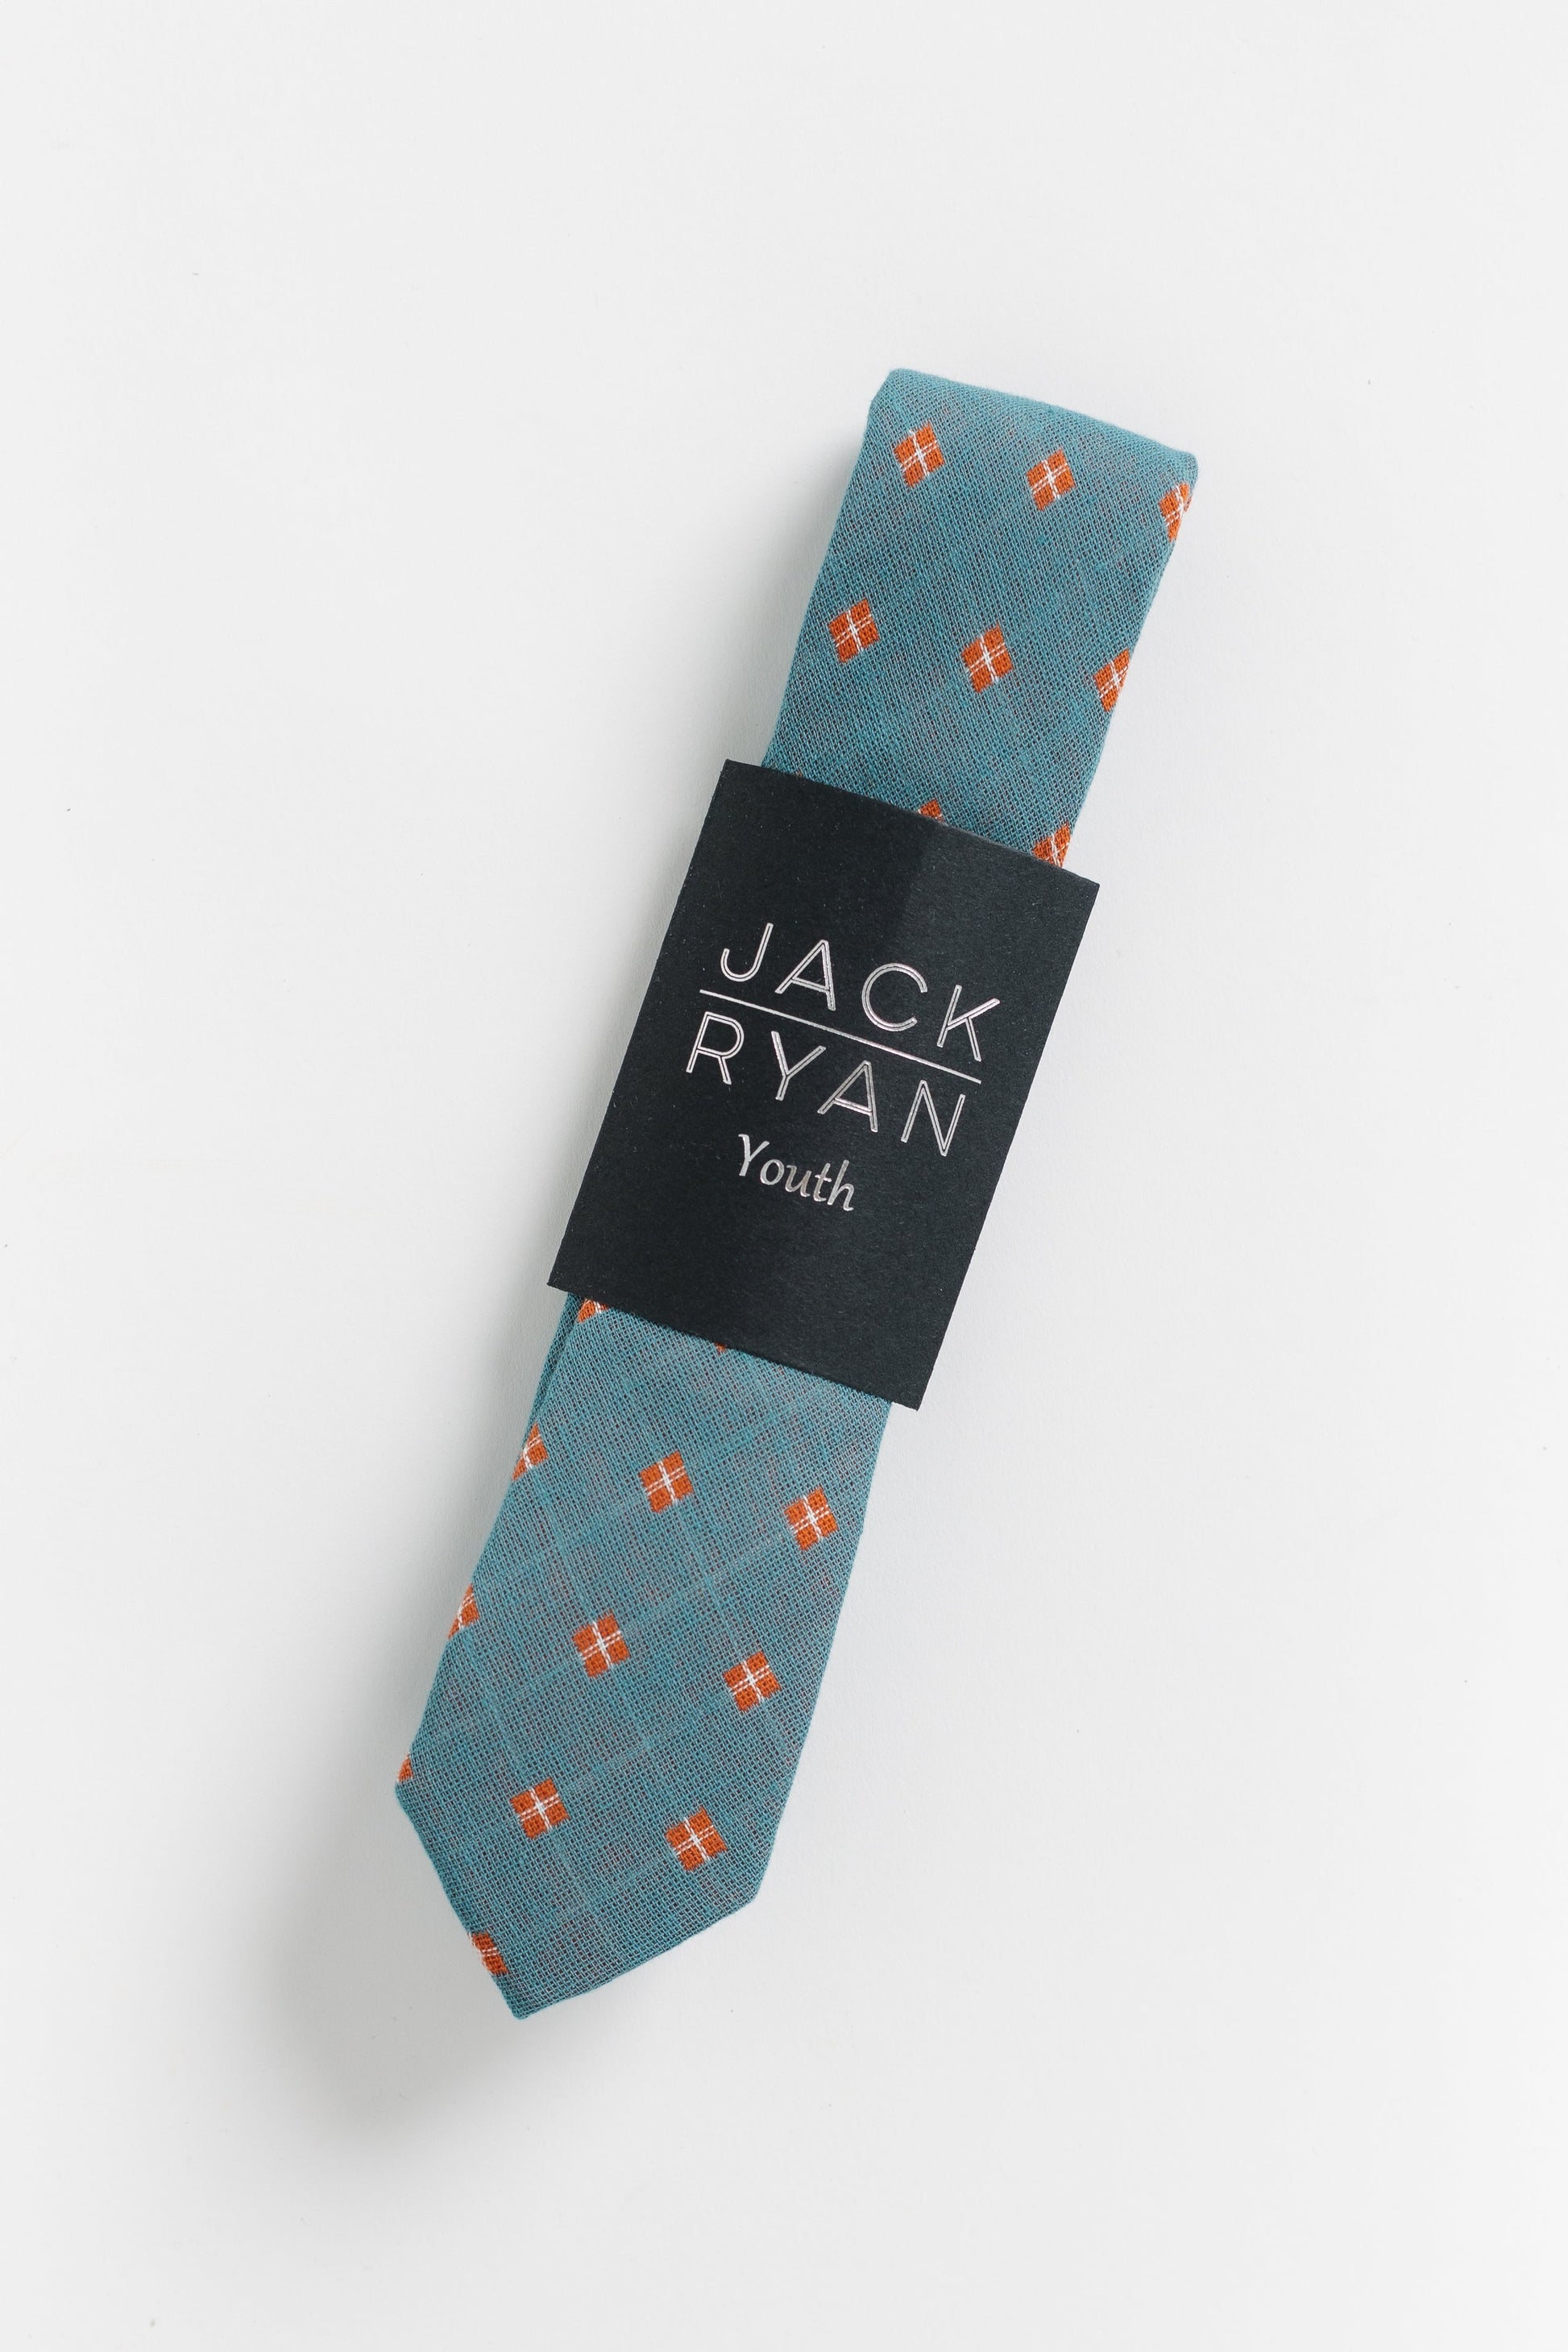 Jack Ryan Spring Collection - Oscar MEN'S TIE JACK RYAN Oscar Youth 48"L x 2"W 